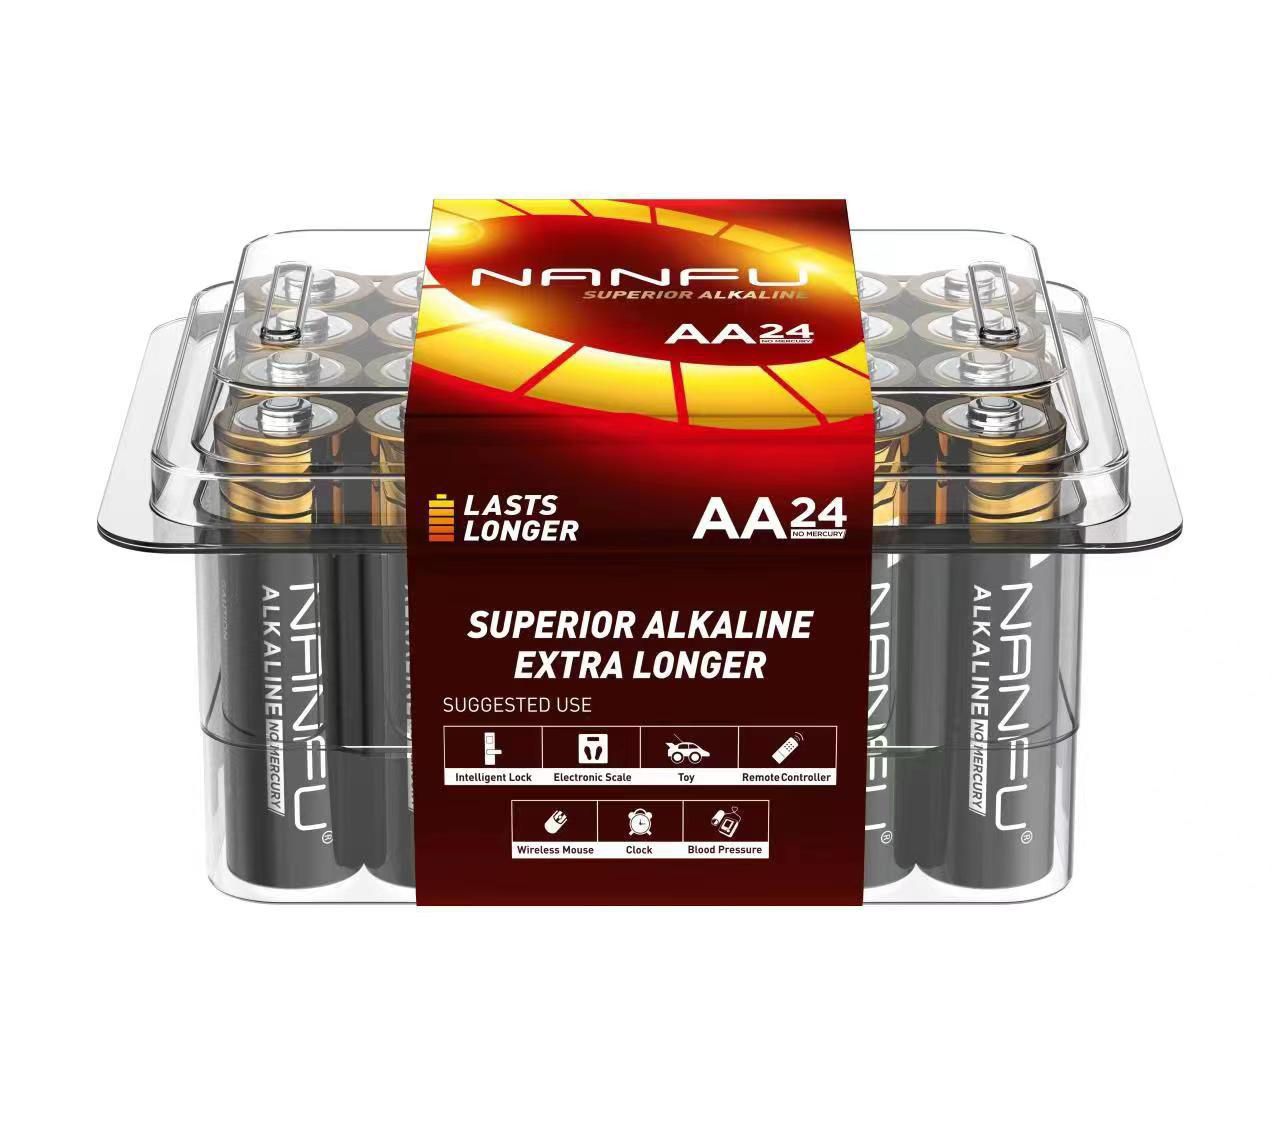 Lot of 48 AAA or AA Alkaline Batteries 